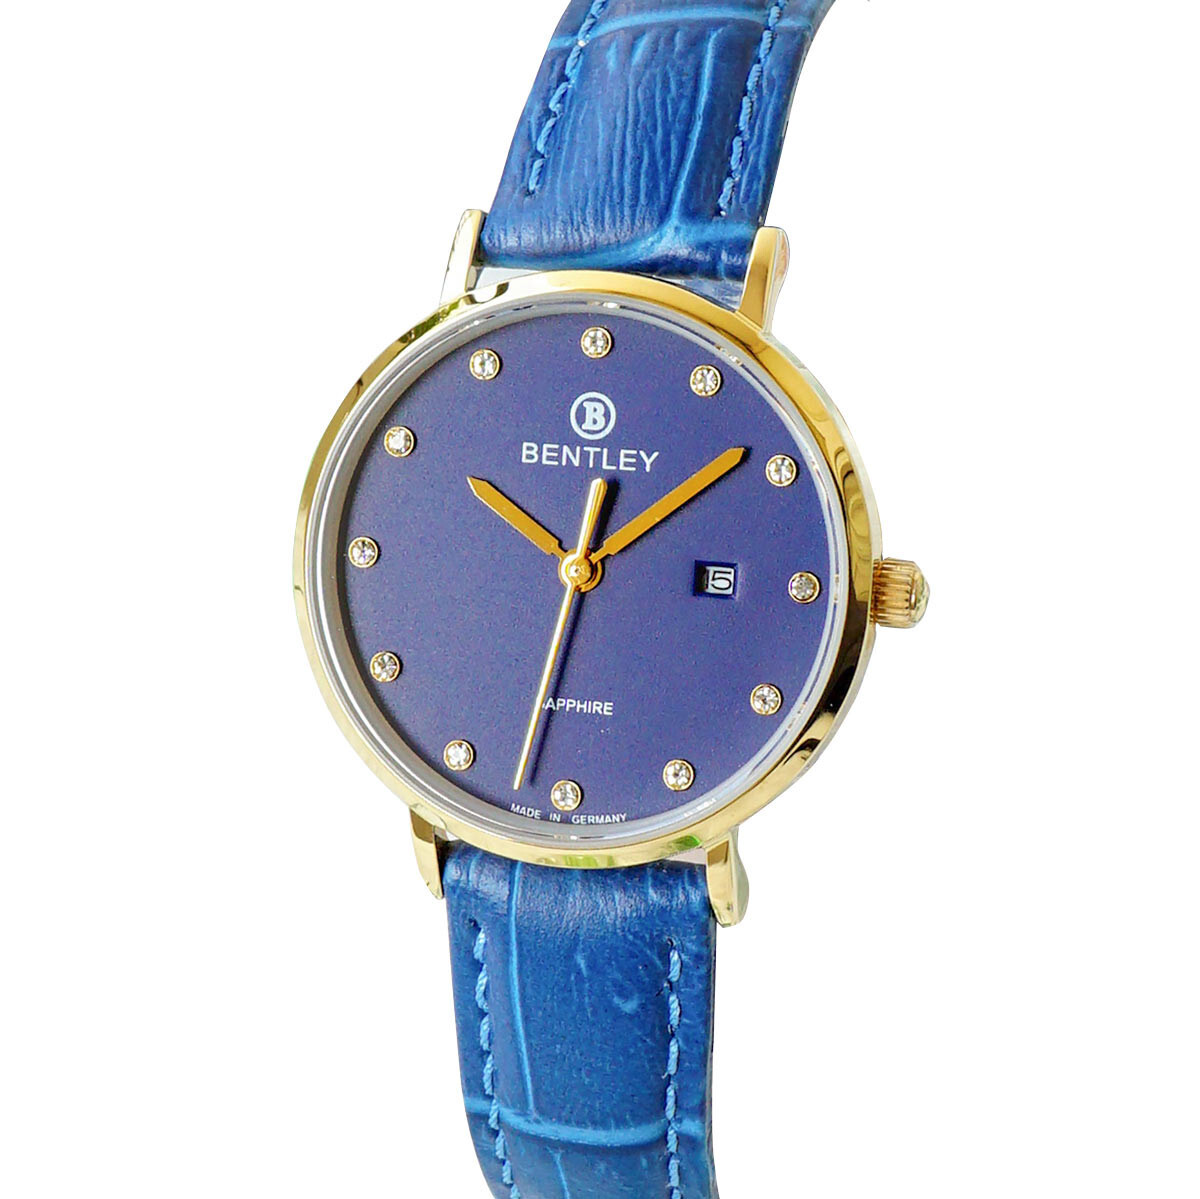 Đồng hồ nữ Bentley BL1805-101LKNN